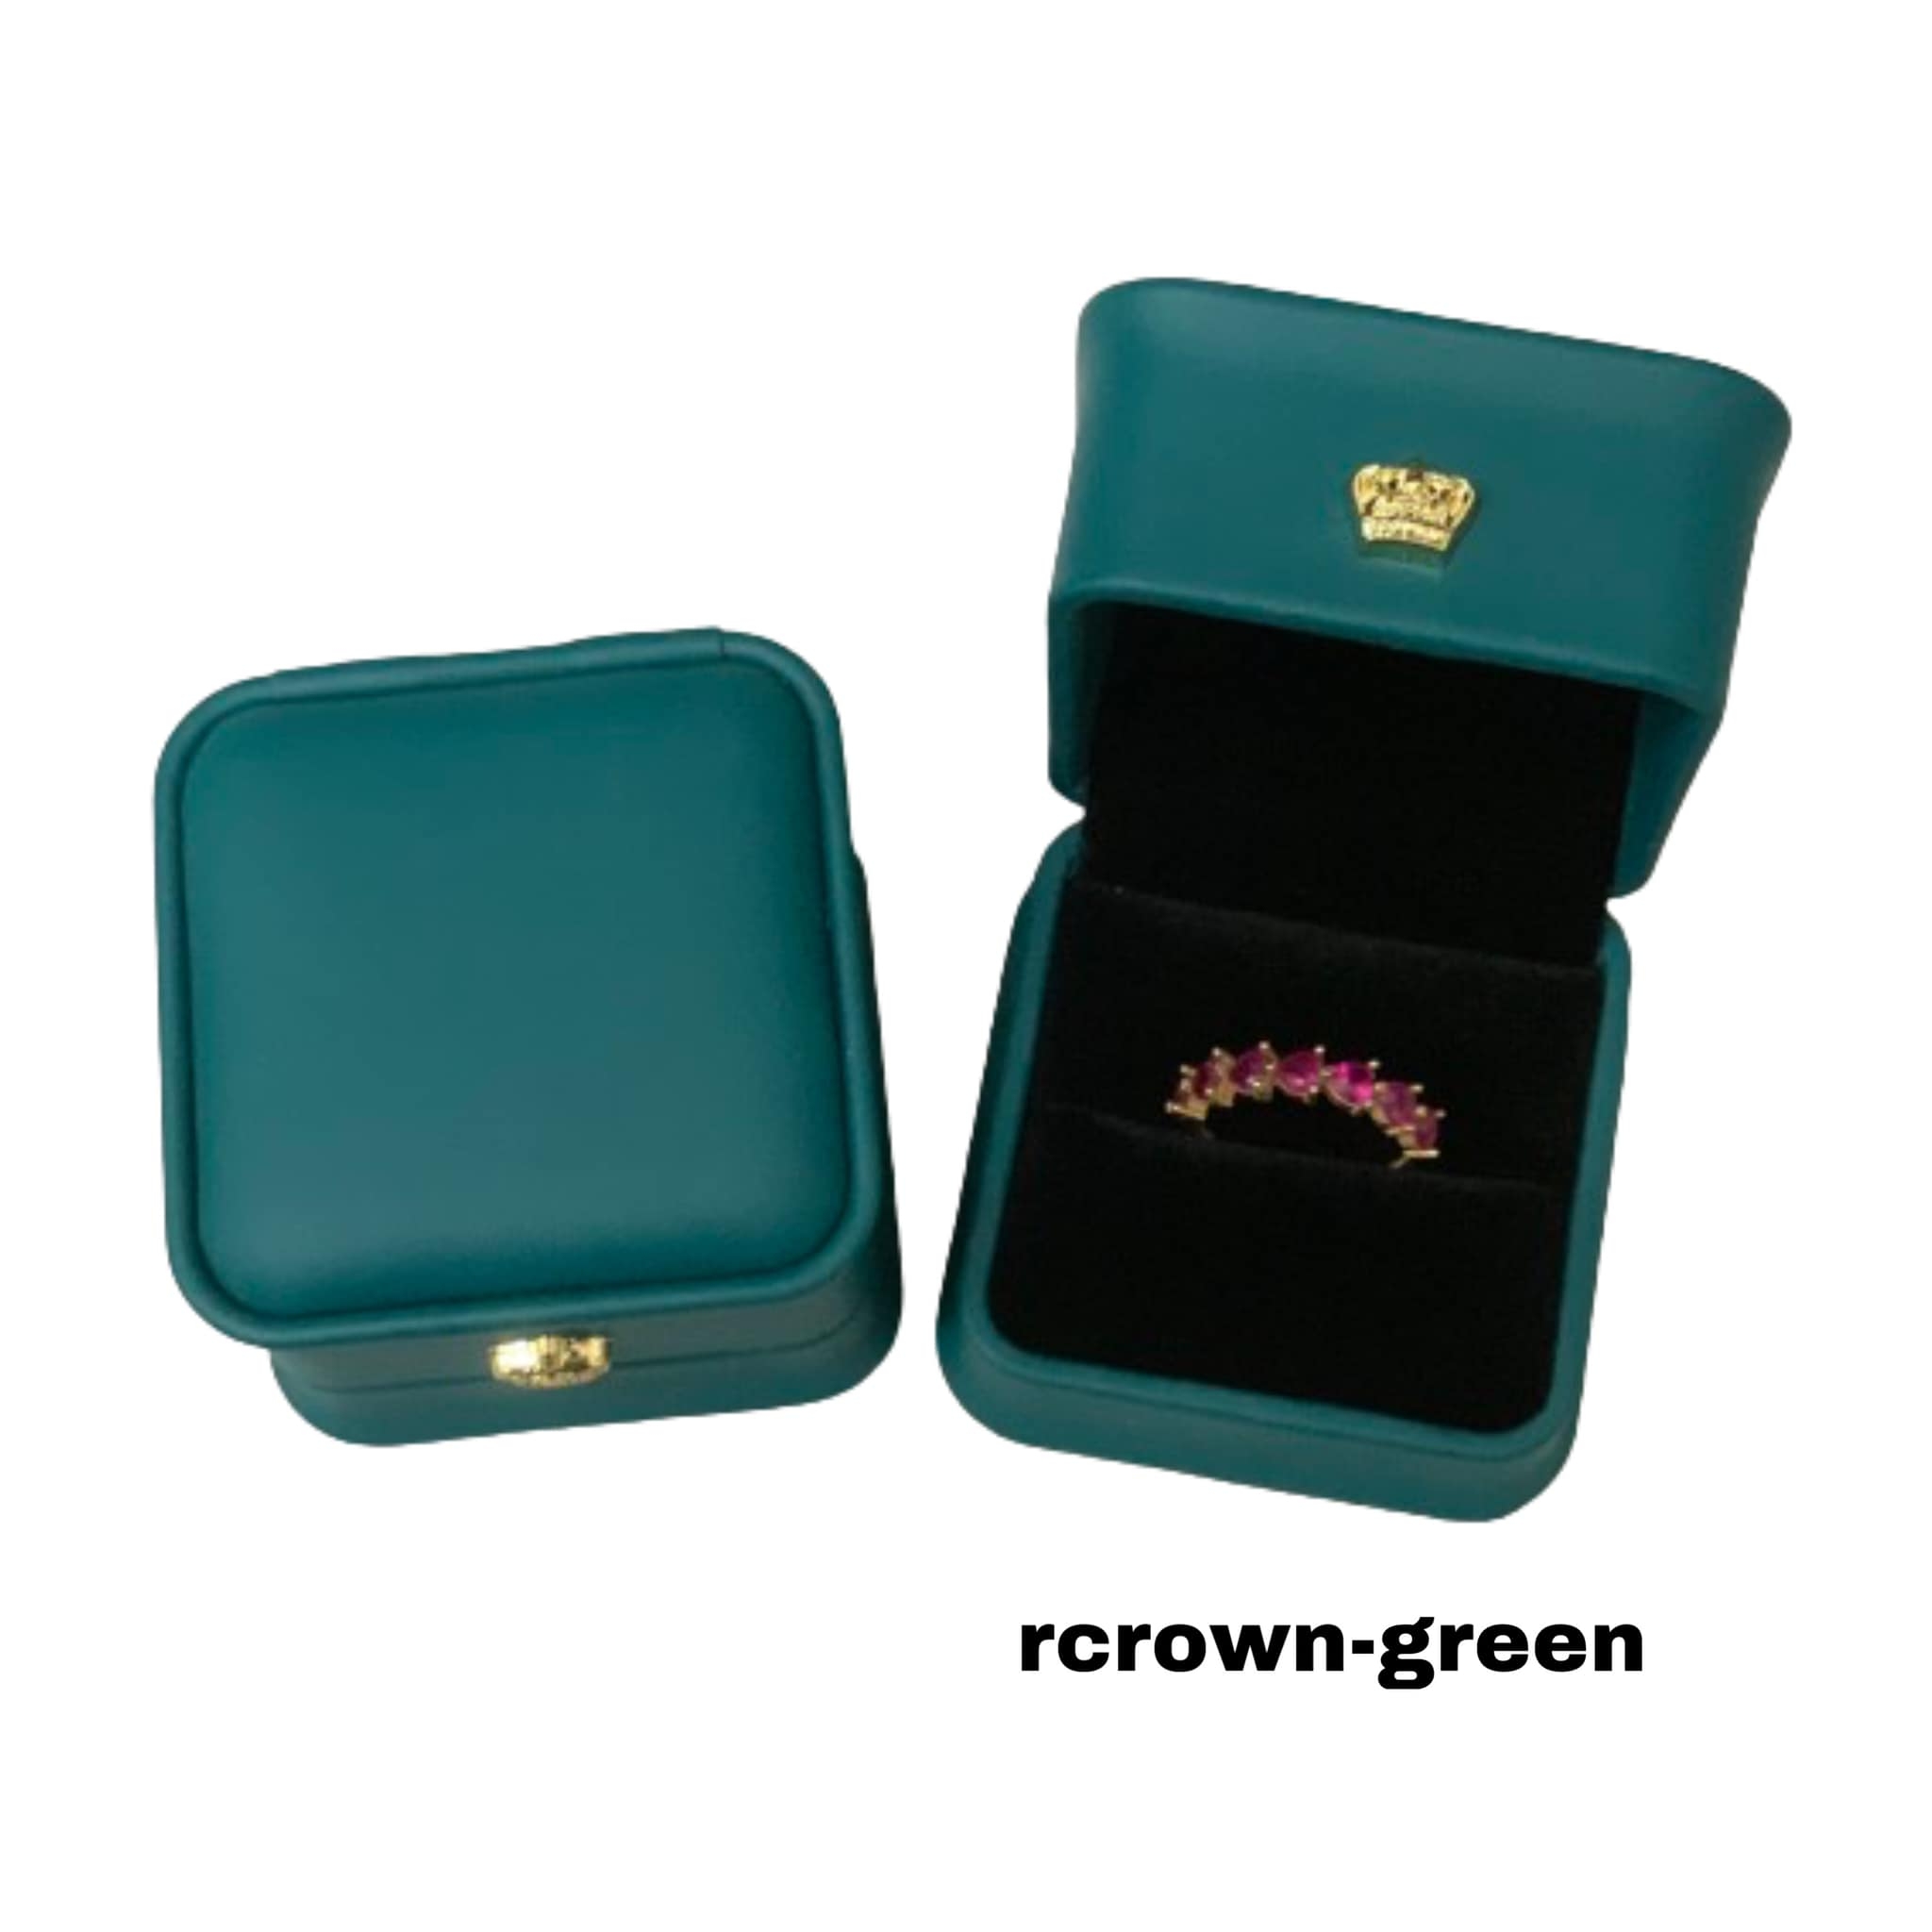 rcrown-green